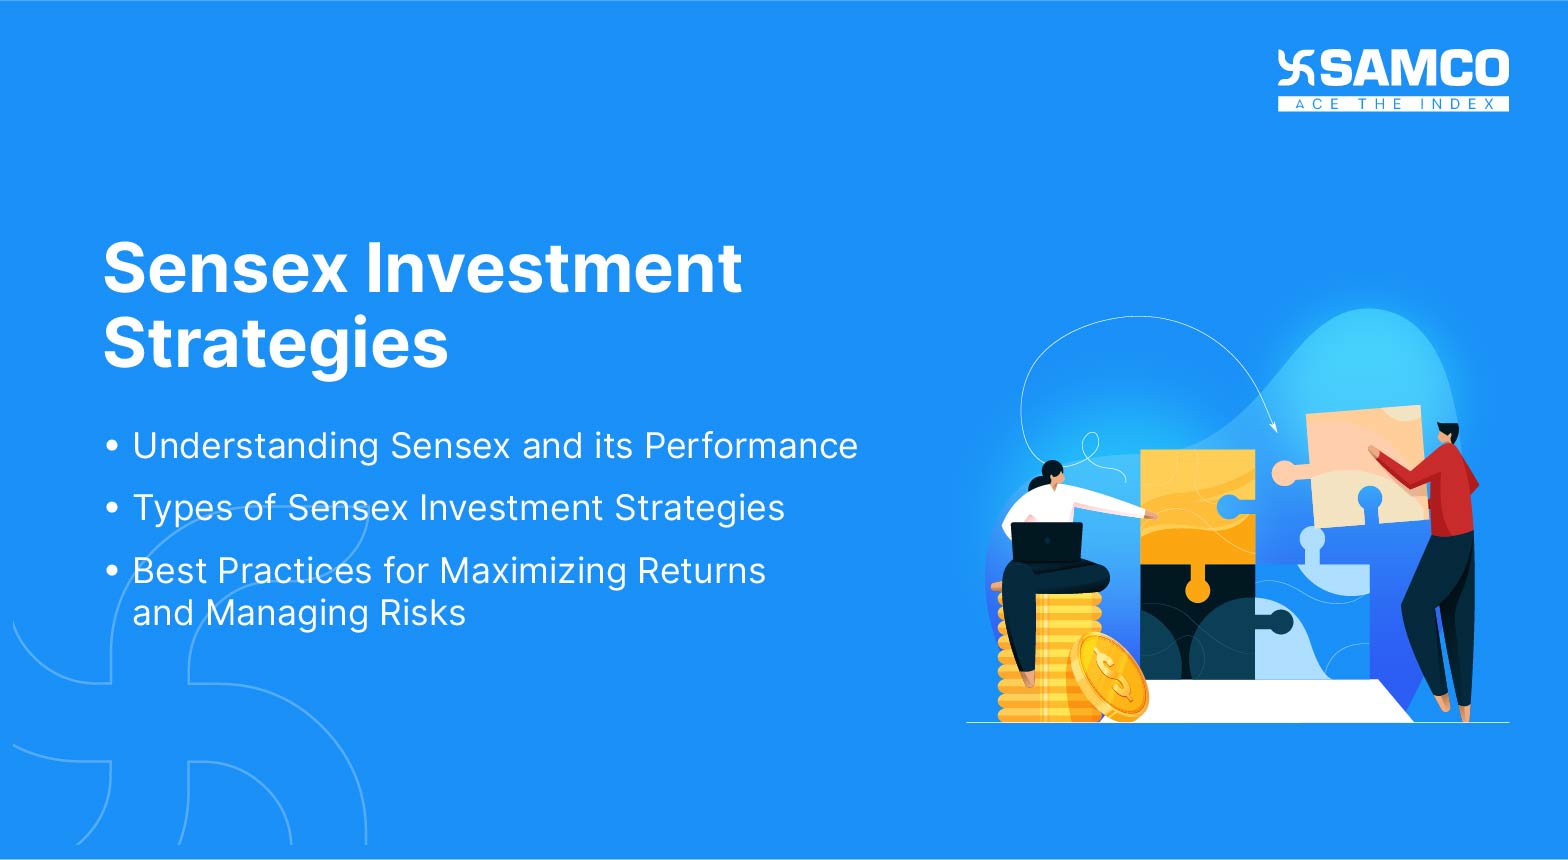 Sensex Investment Strategies